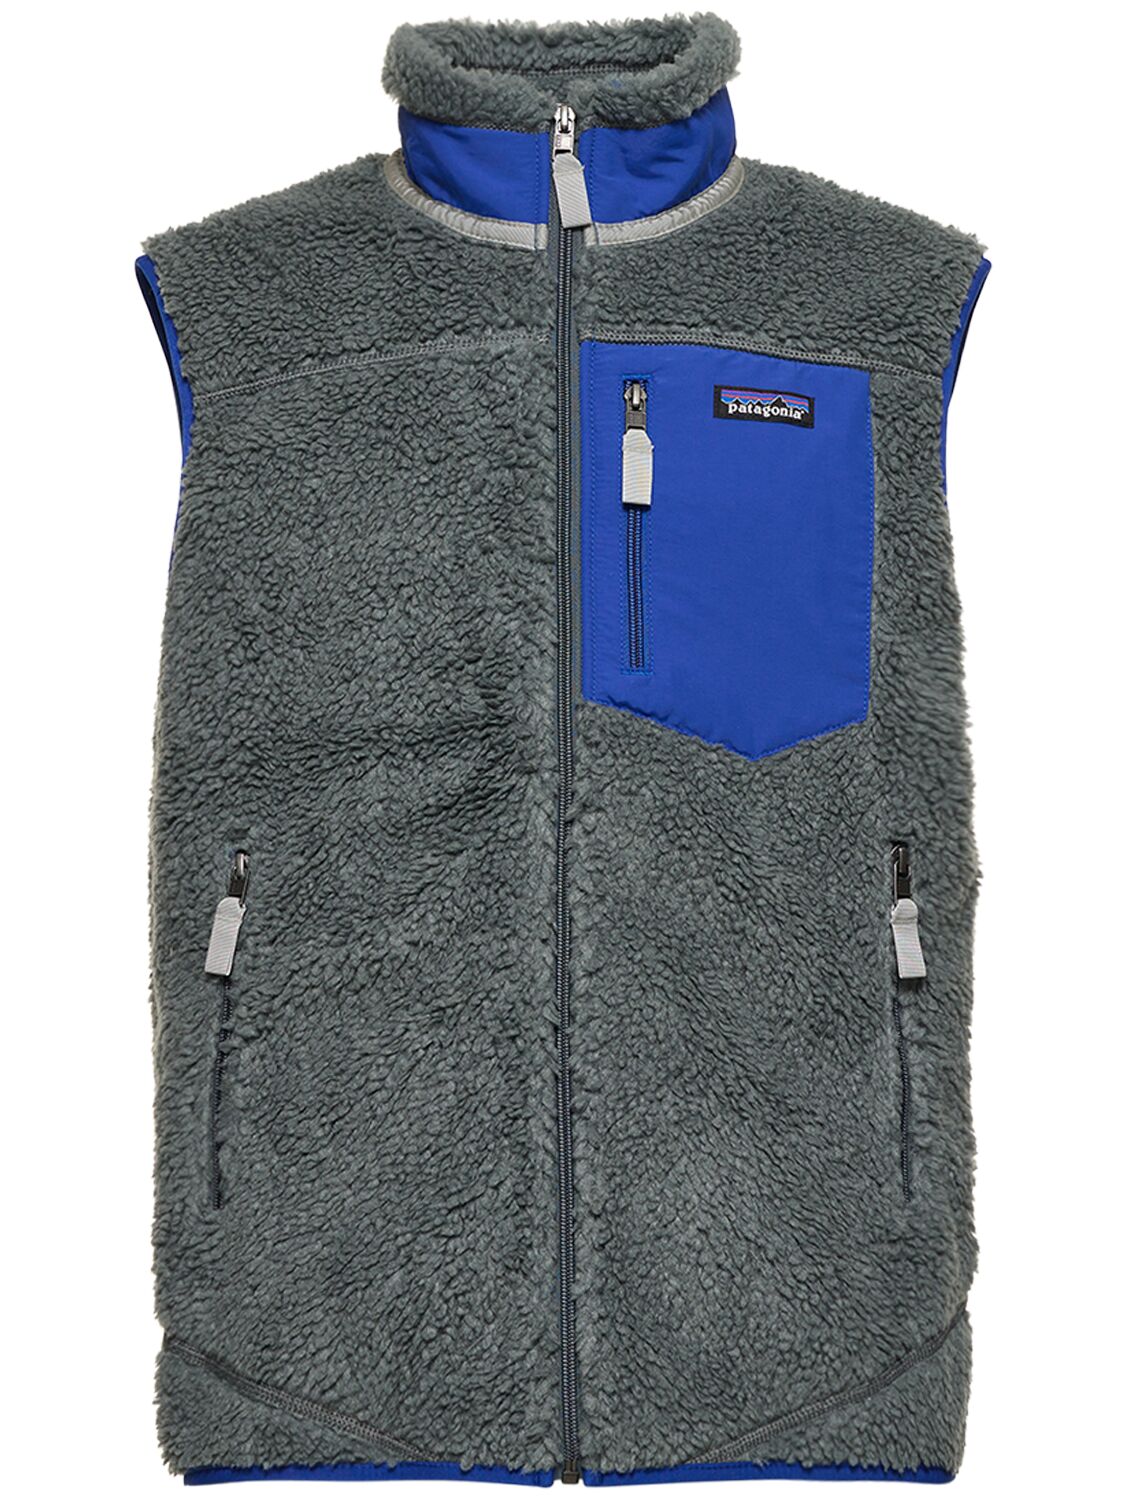 Classic Retro-x Recycled Tech Vest